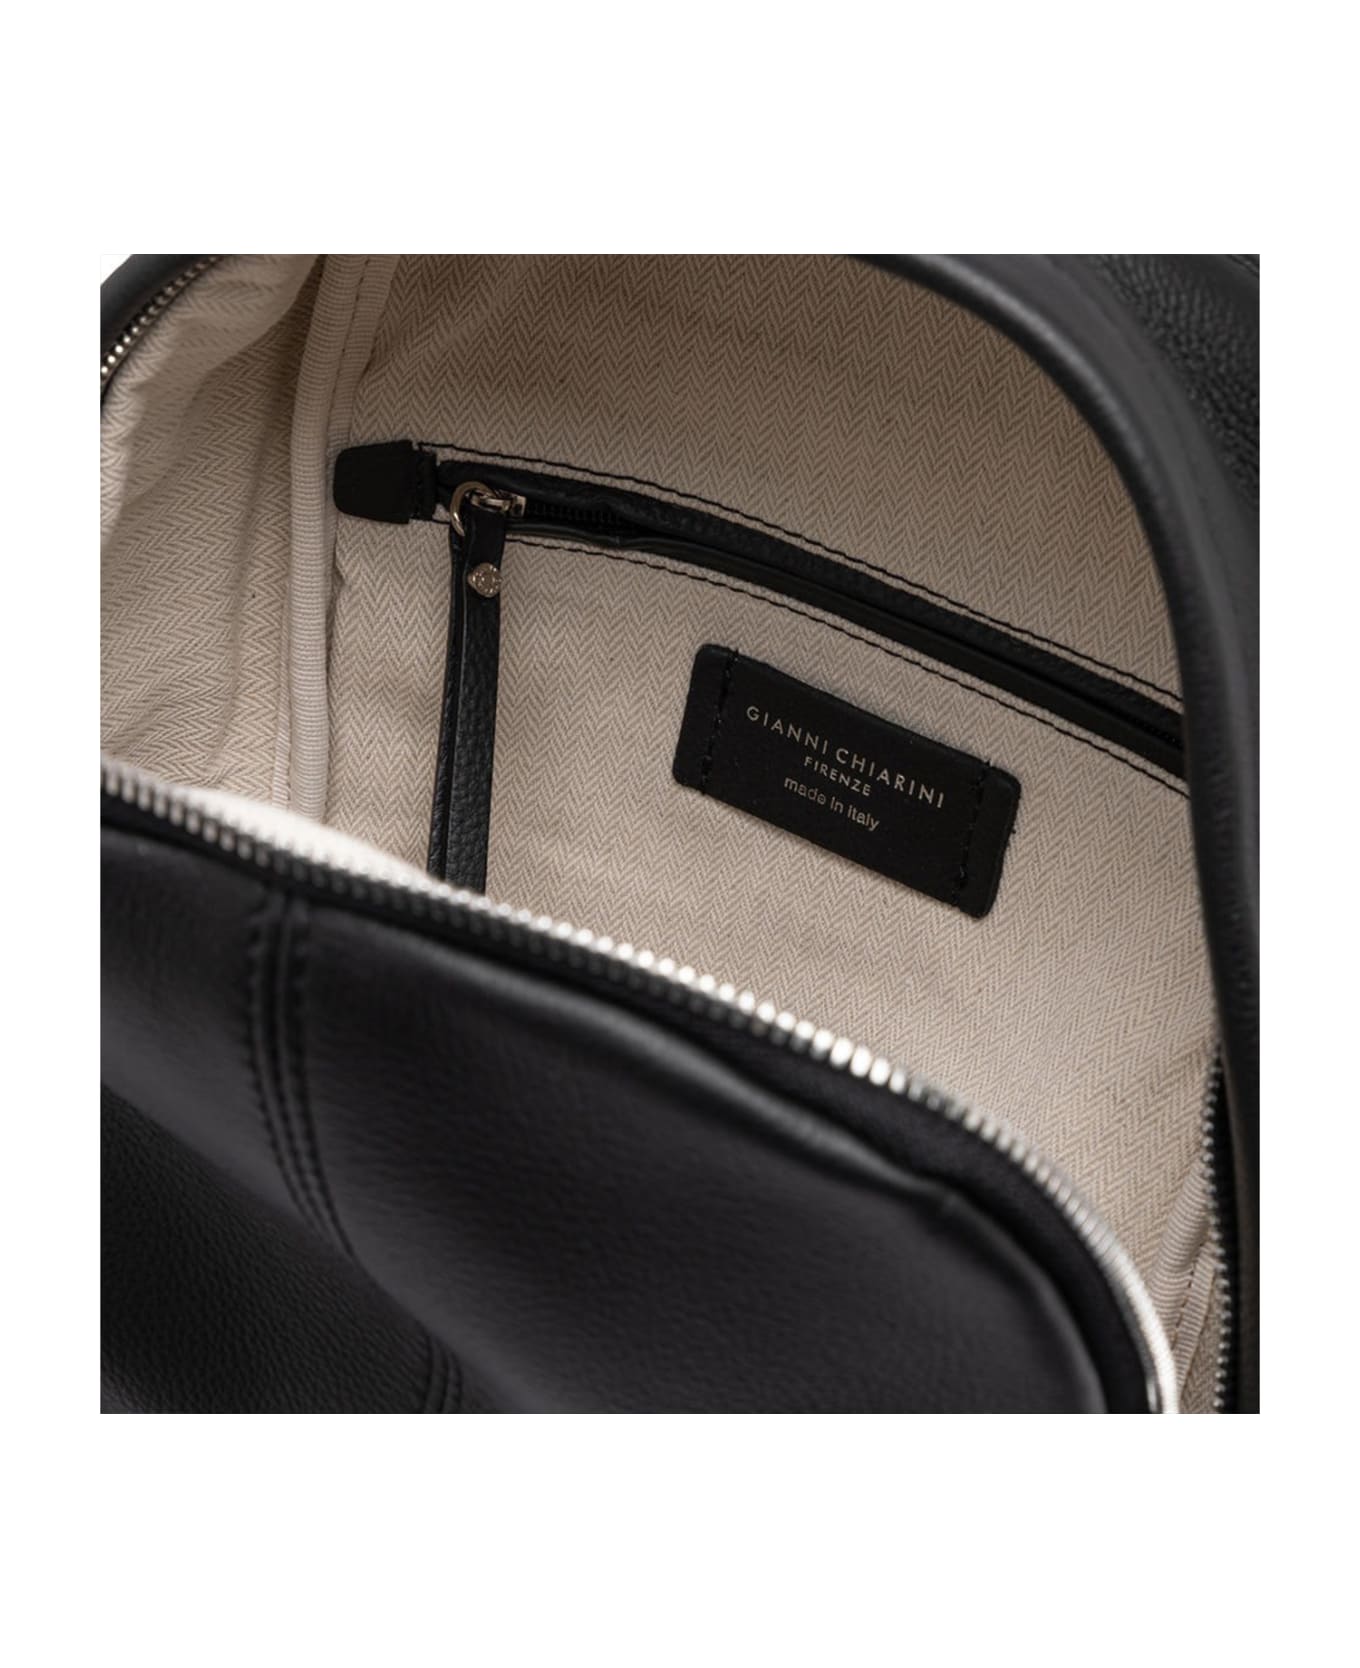 Gianni Chiarini Ambra Backpack In Matt Effect Leather - NERO バックパック